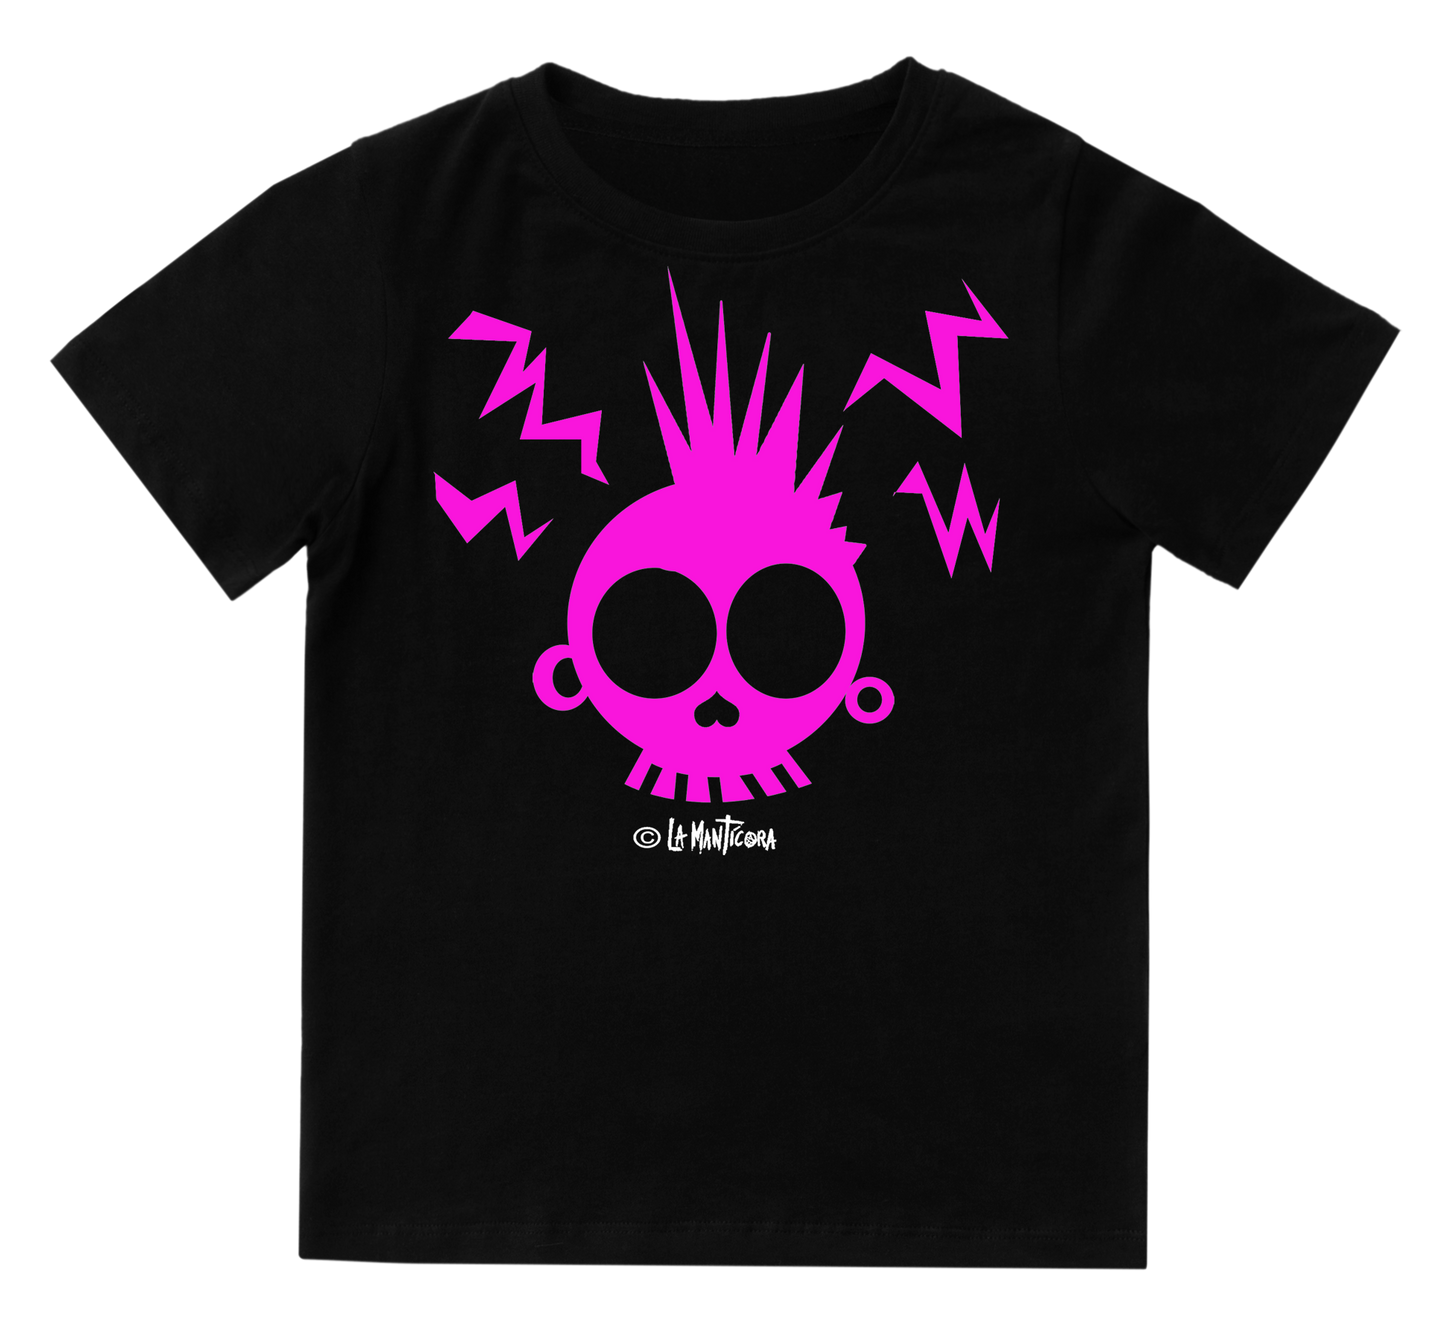 Camiseta niño Skull Angry rosa